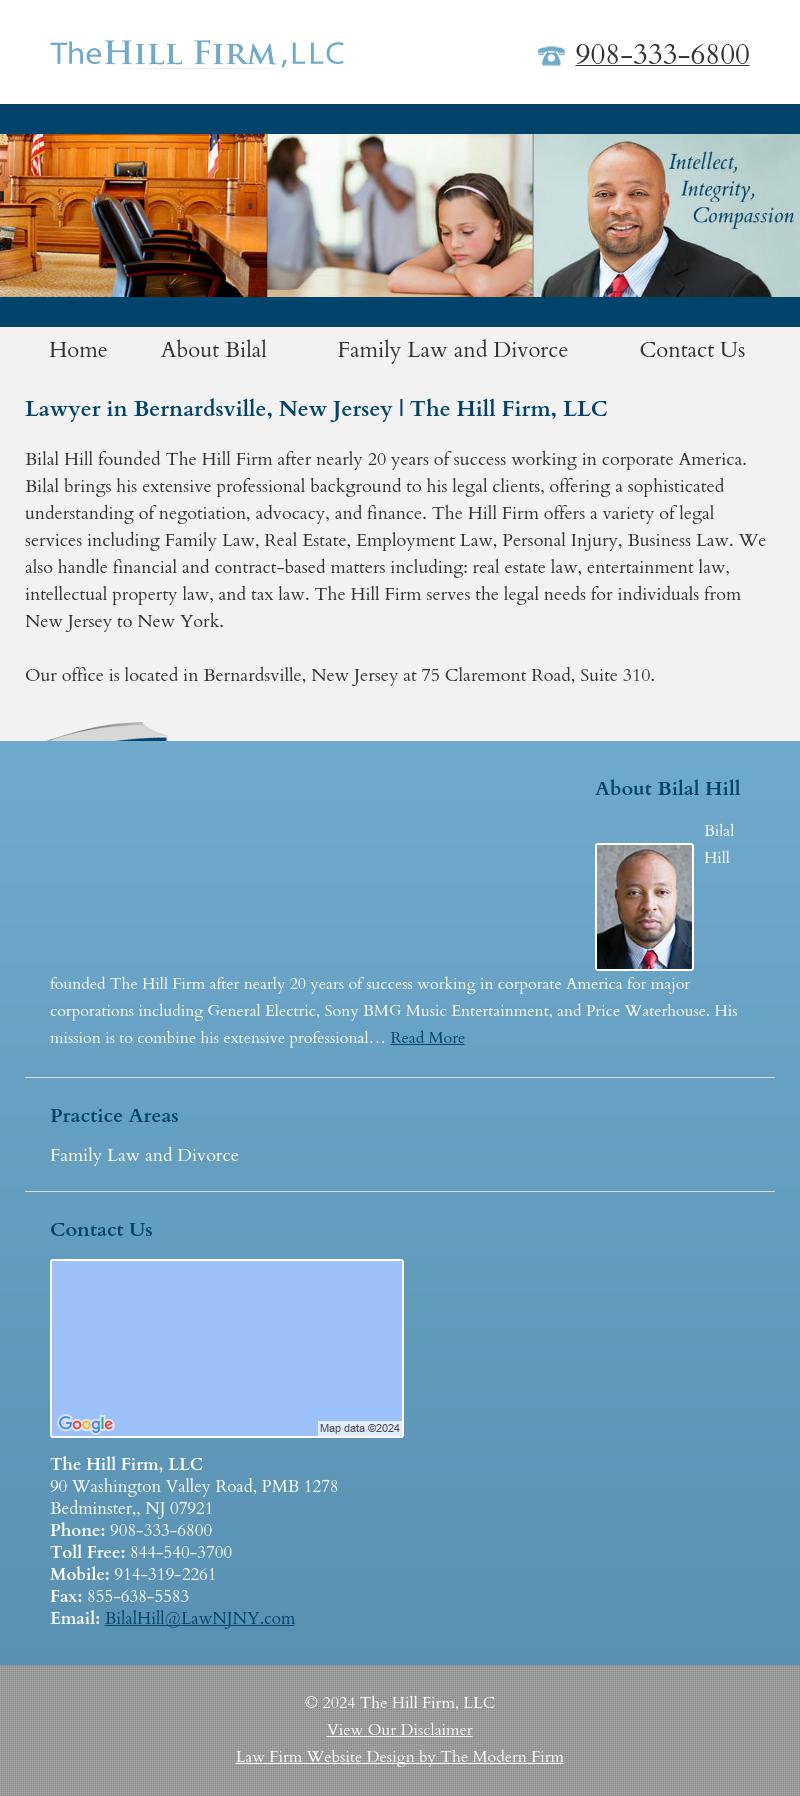 The Hill Firm, LLC - Basking Ridge NJ Lawyers